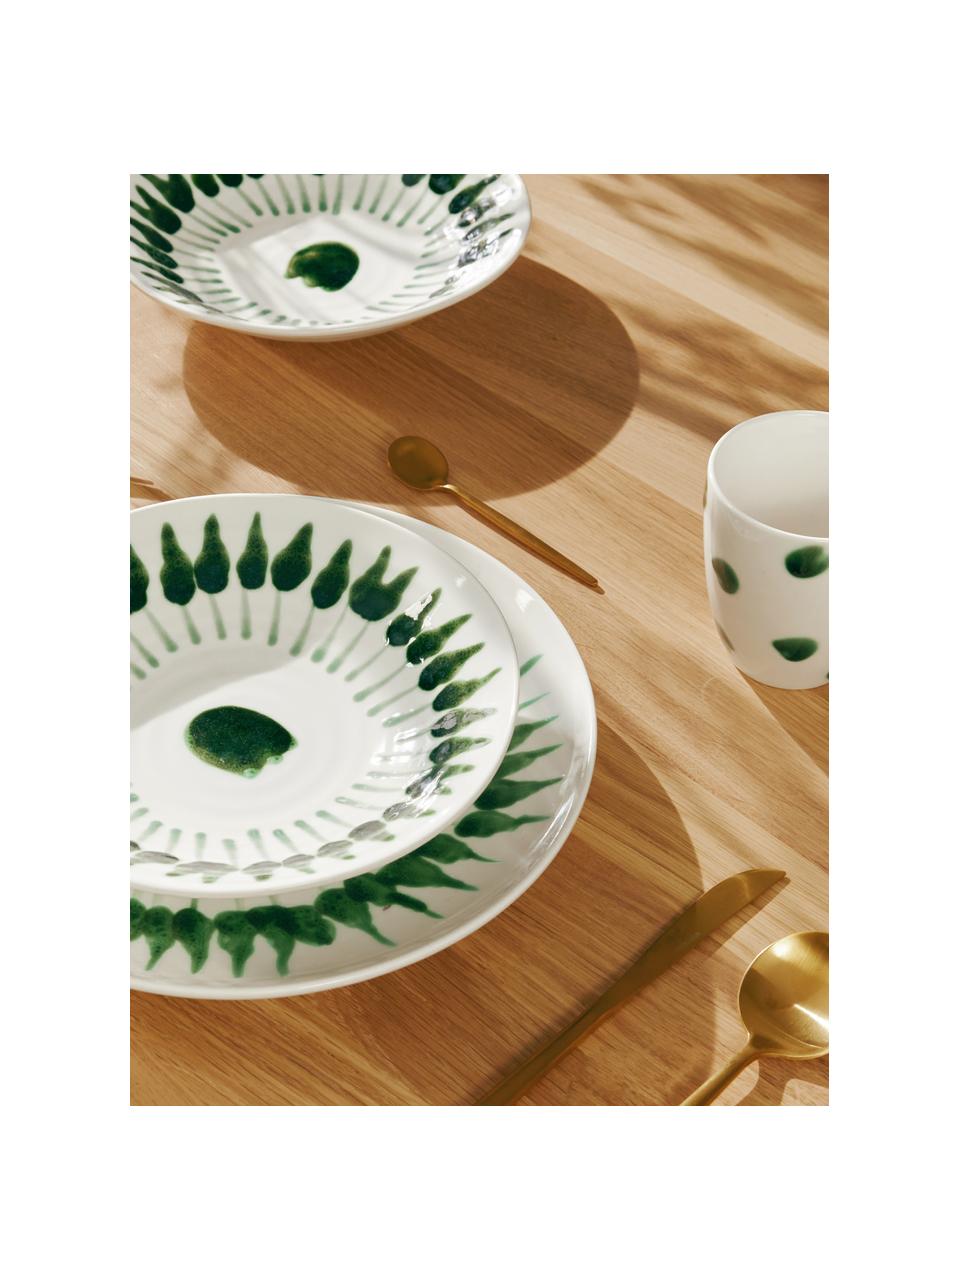 Handbemalter soepbord Sparks met penseelstreek decoratie, Keramiek, Wit, groen, Ø 22 cm